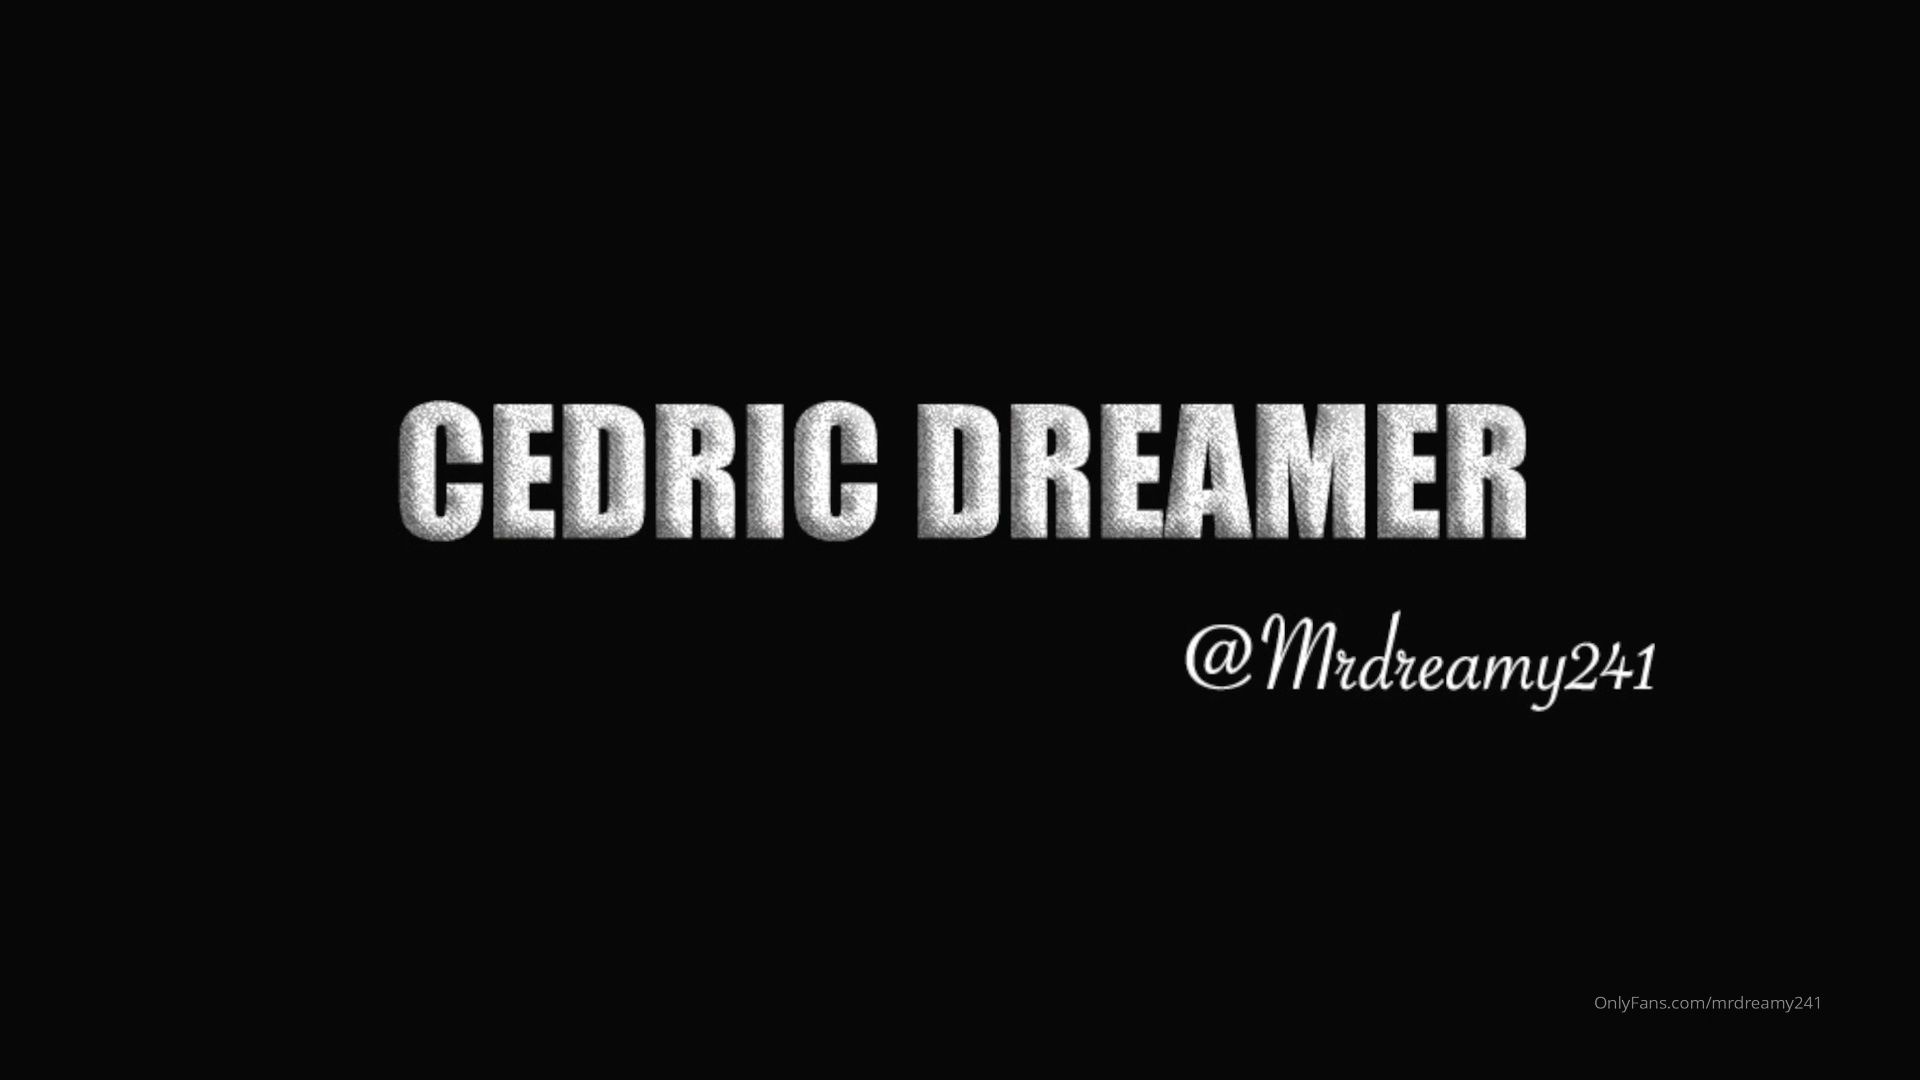 Cedric dreamer